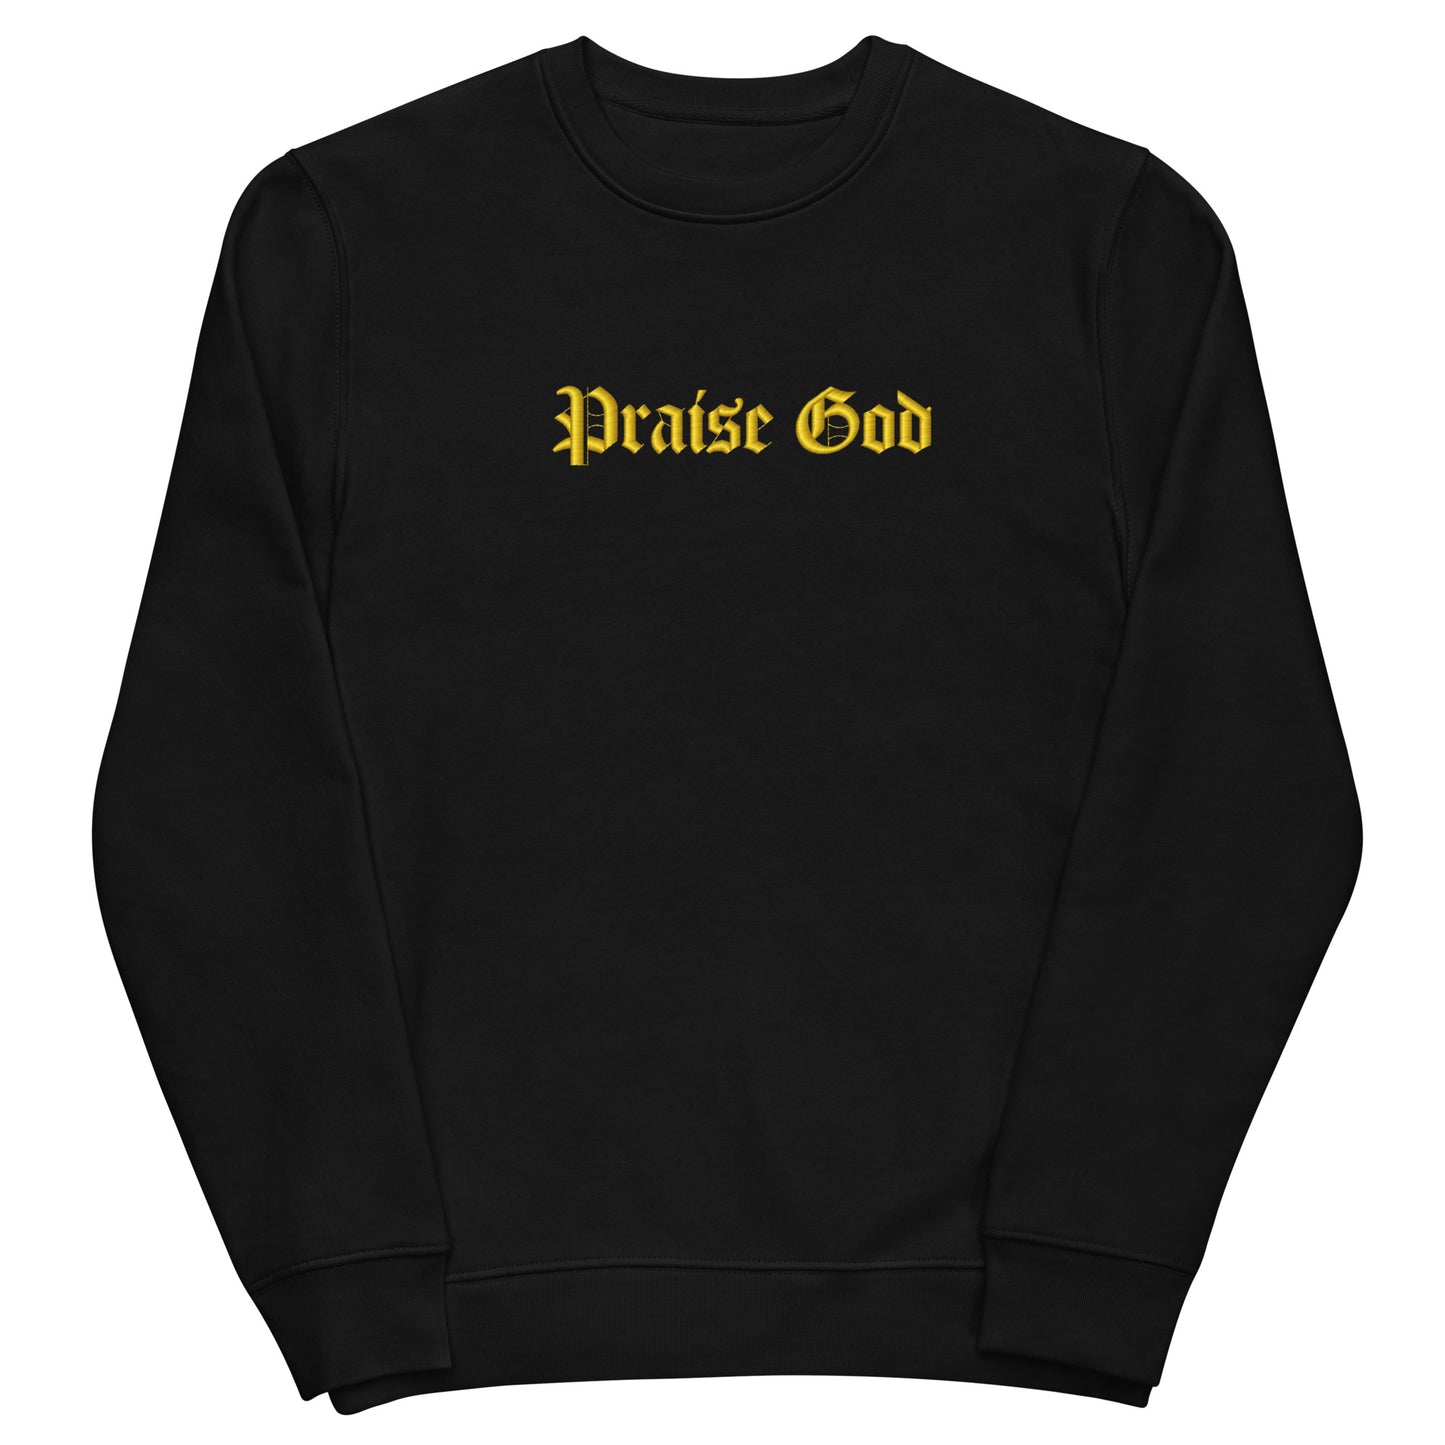 Praise God Classics fashion sweatshirt